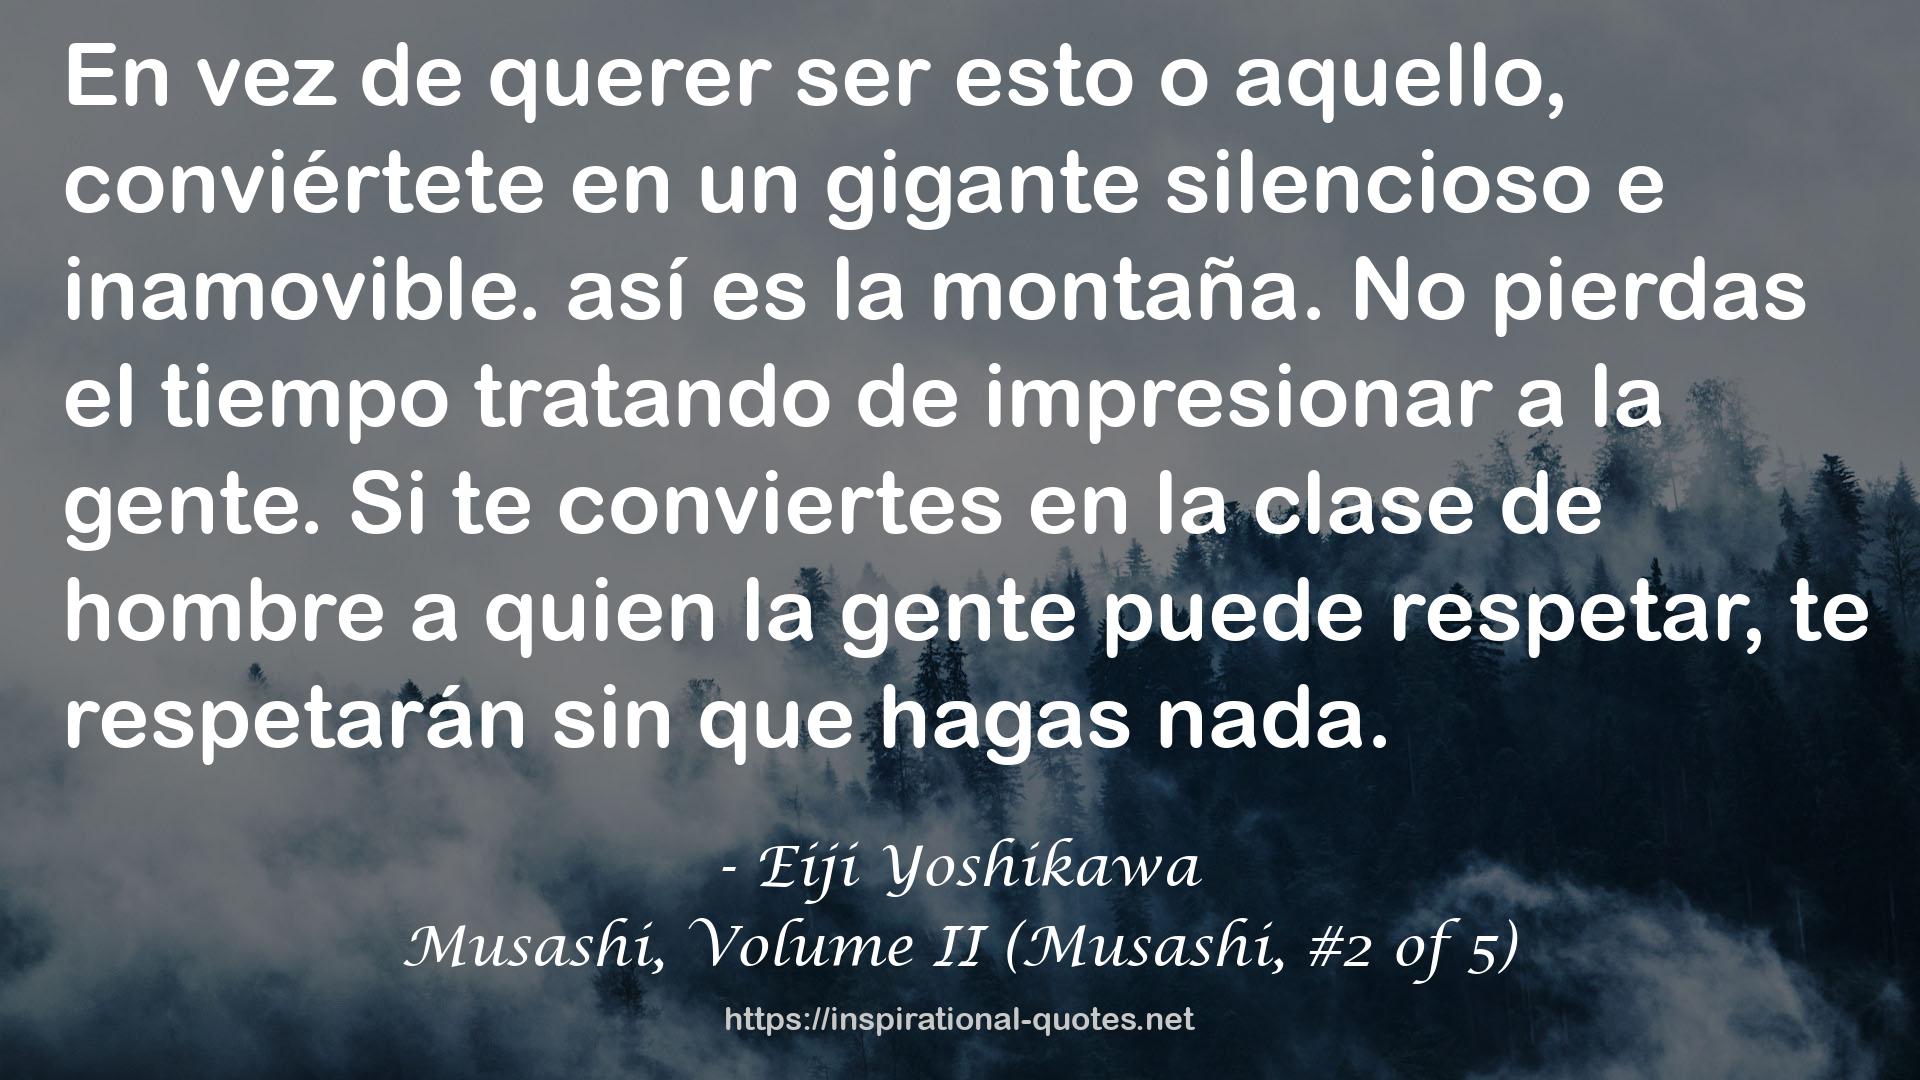 Musashi, Volume II (Musashi, #2 of 5) QUOTES